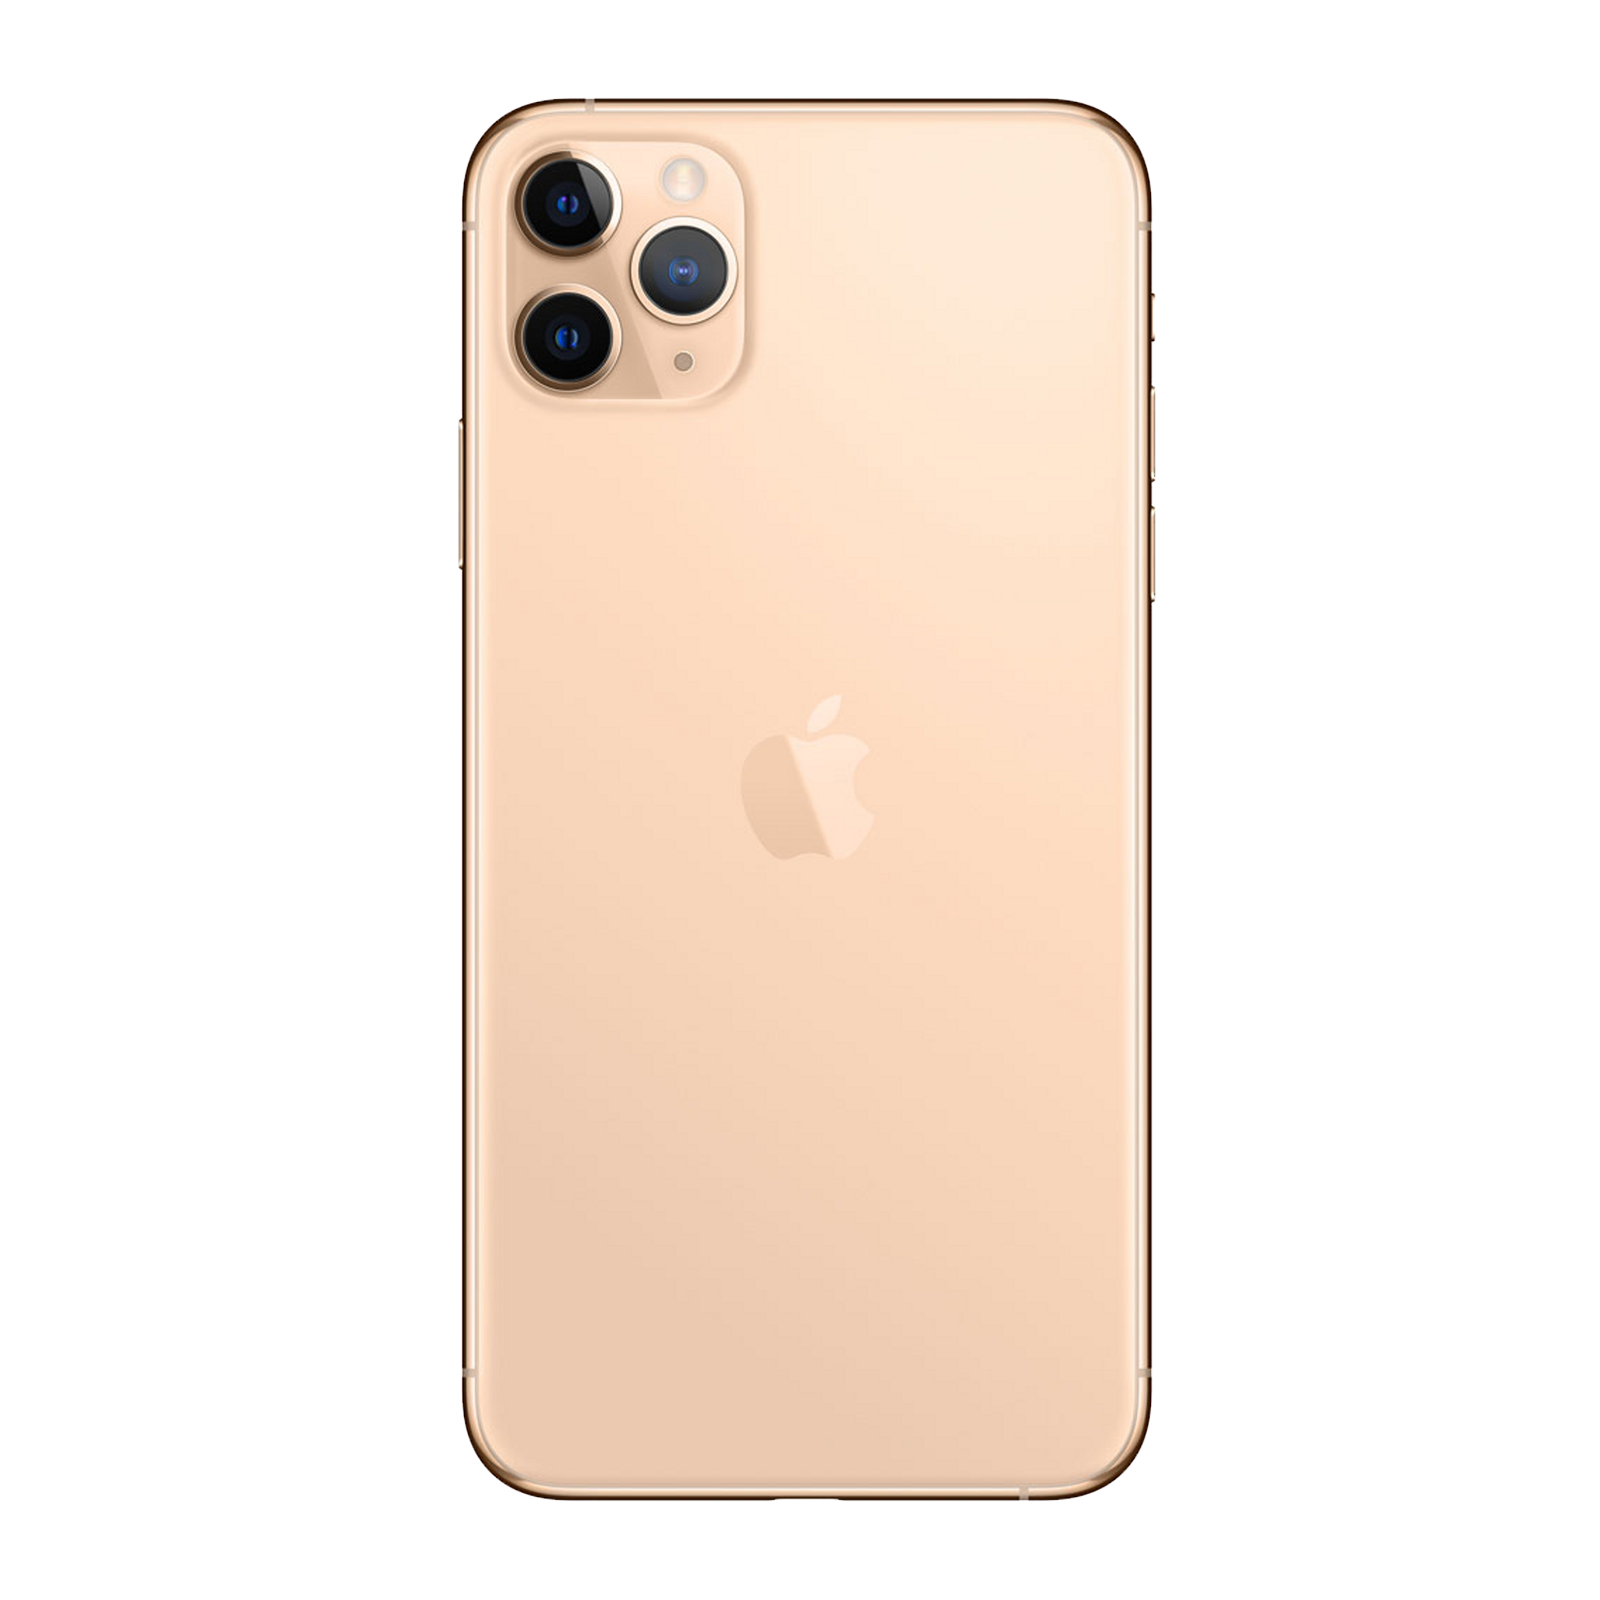 Apple iPhone 11 Pro Max 64GB Gold Pristine - Verizon